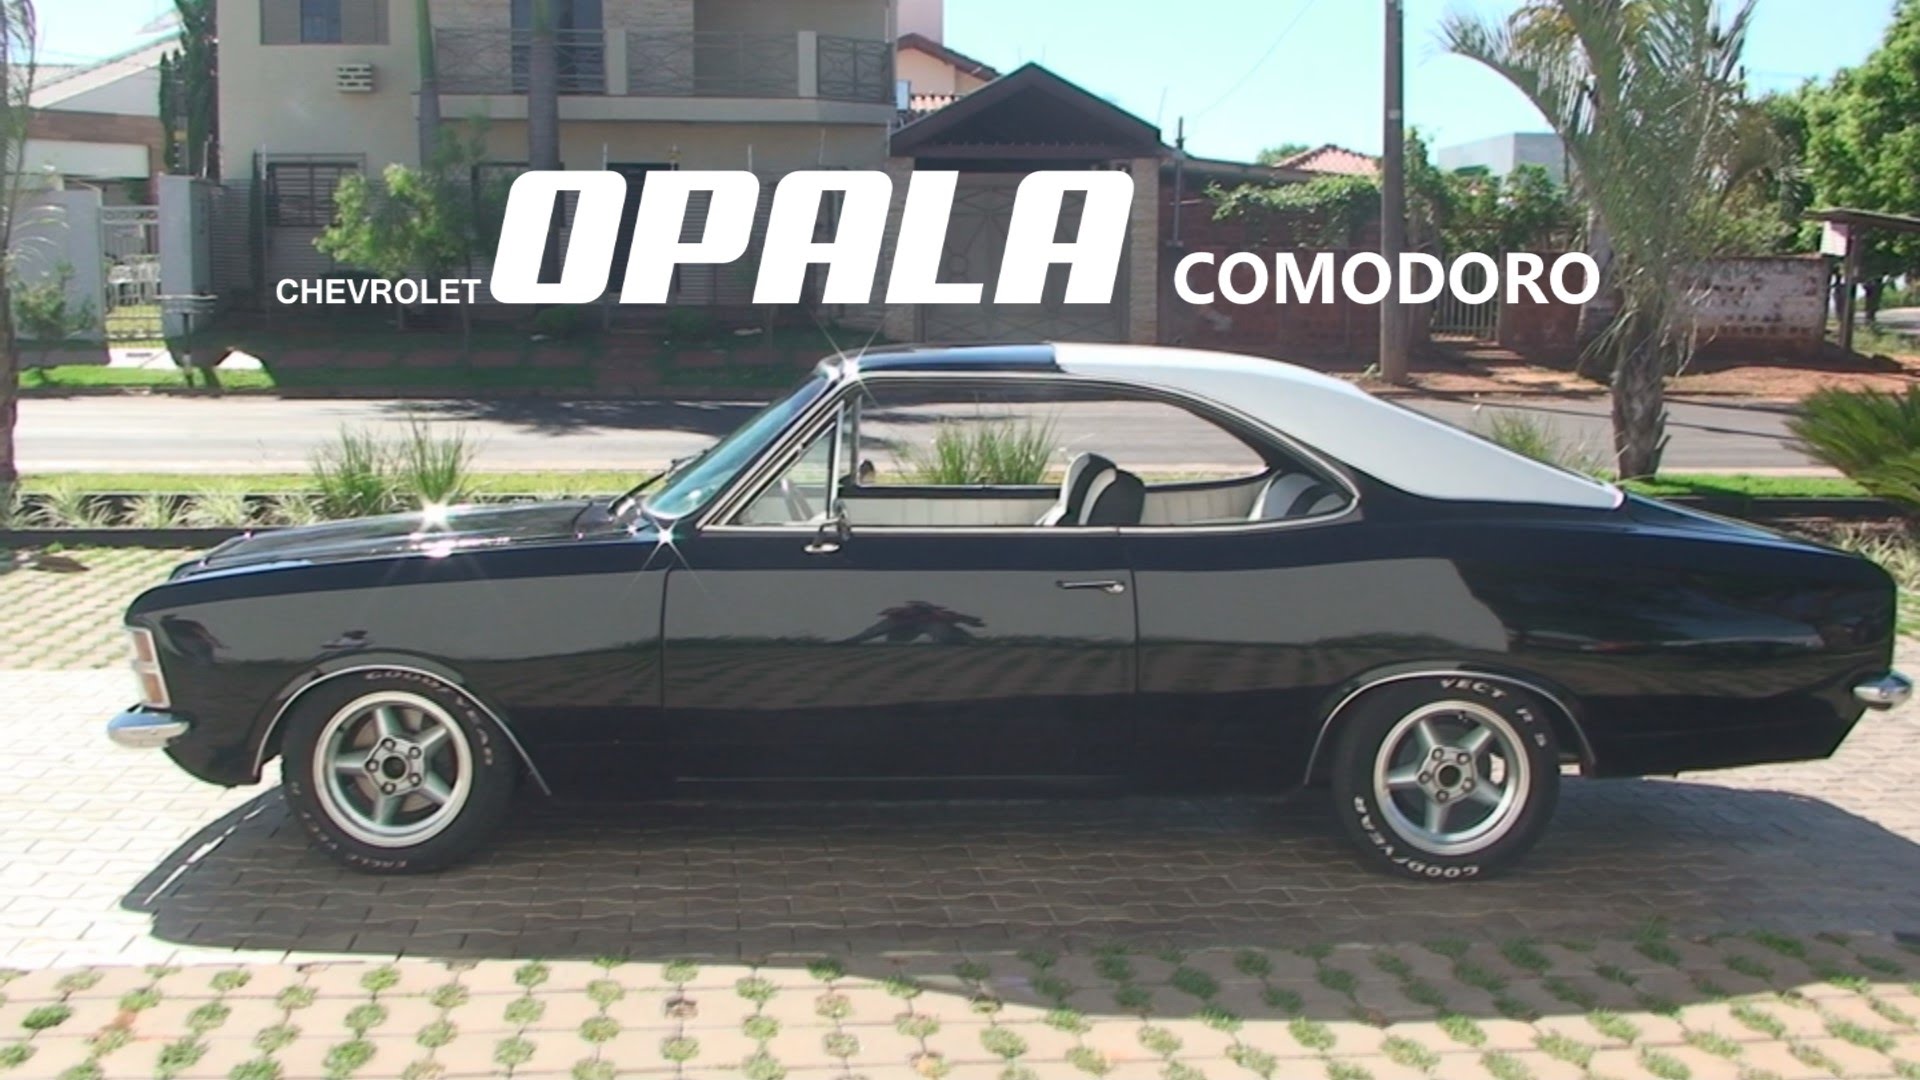 Chevrolet Opala Comodoro #5